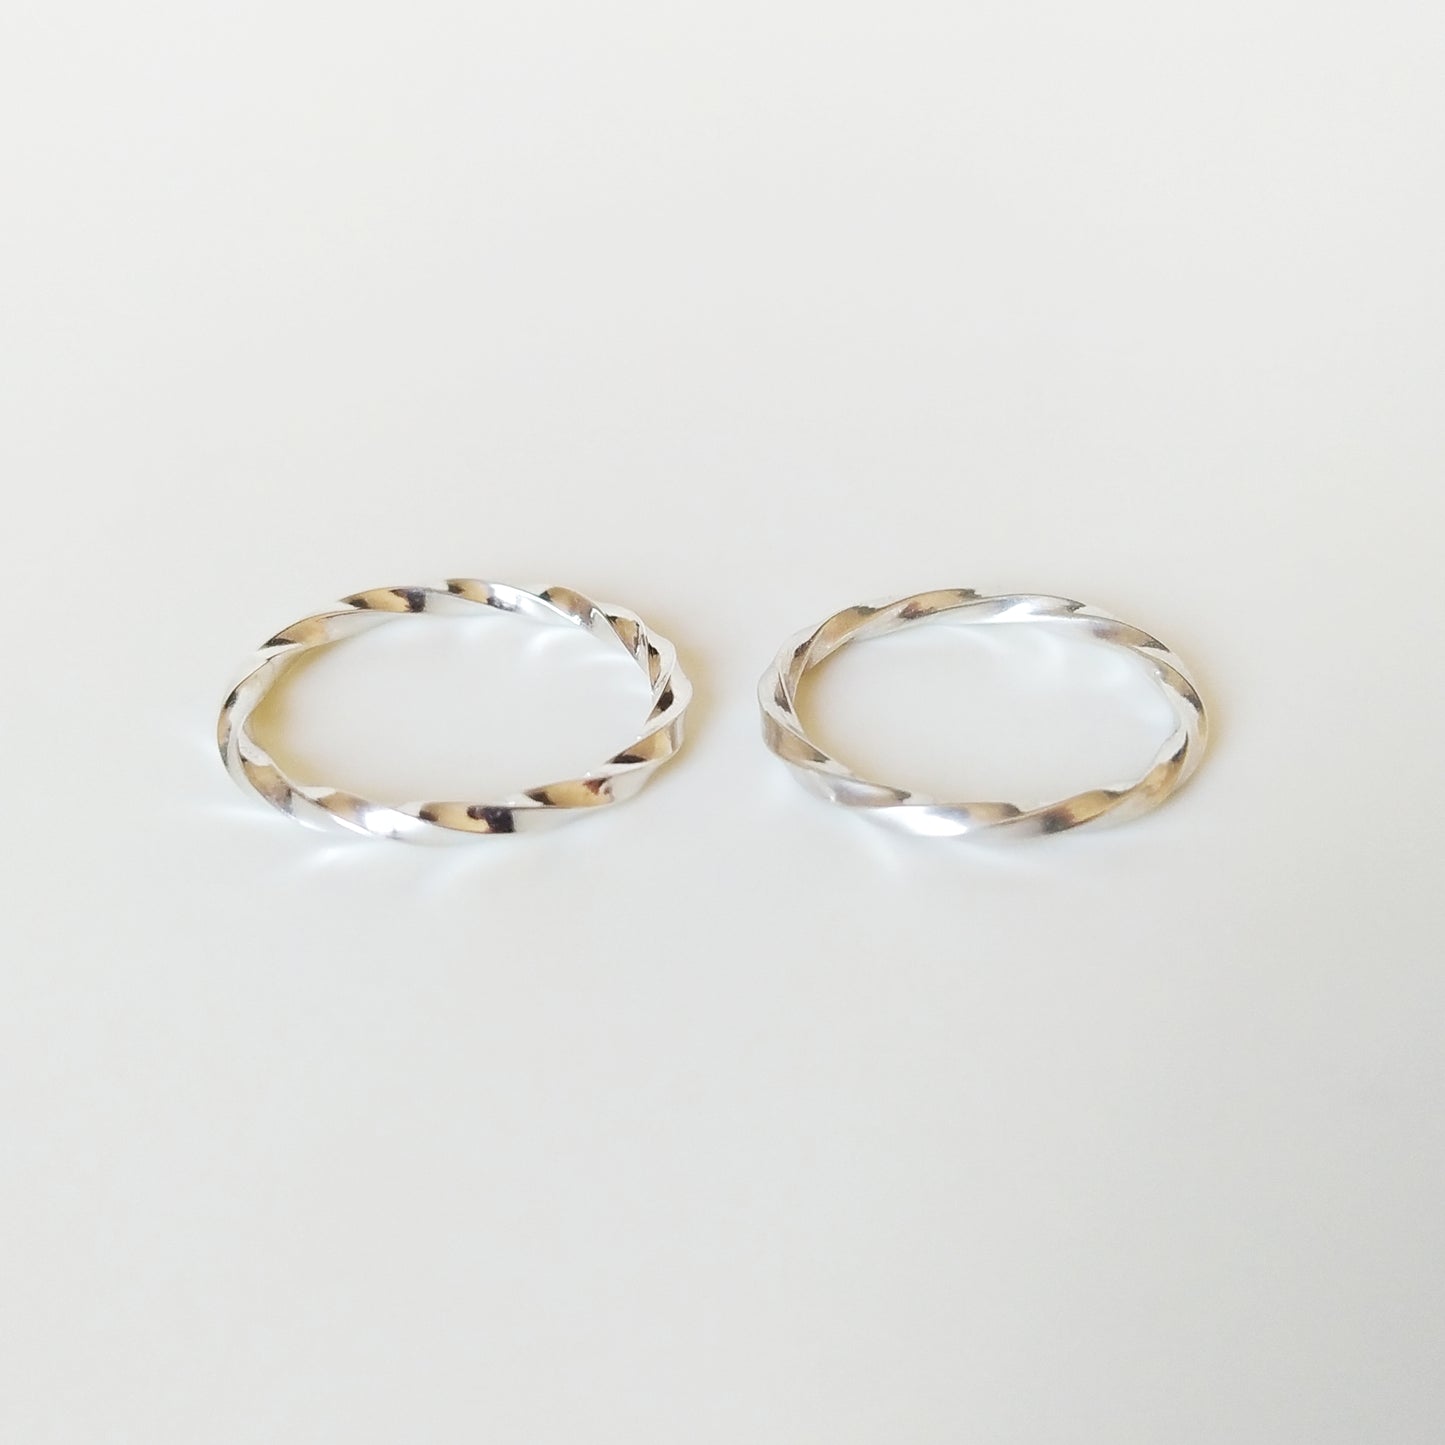 gedrehter Ring aus Silber | Darian